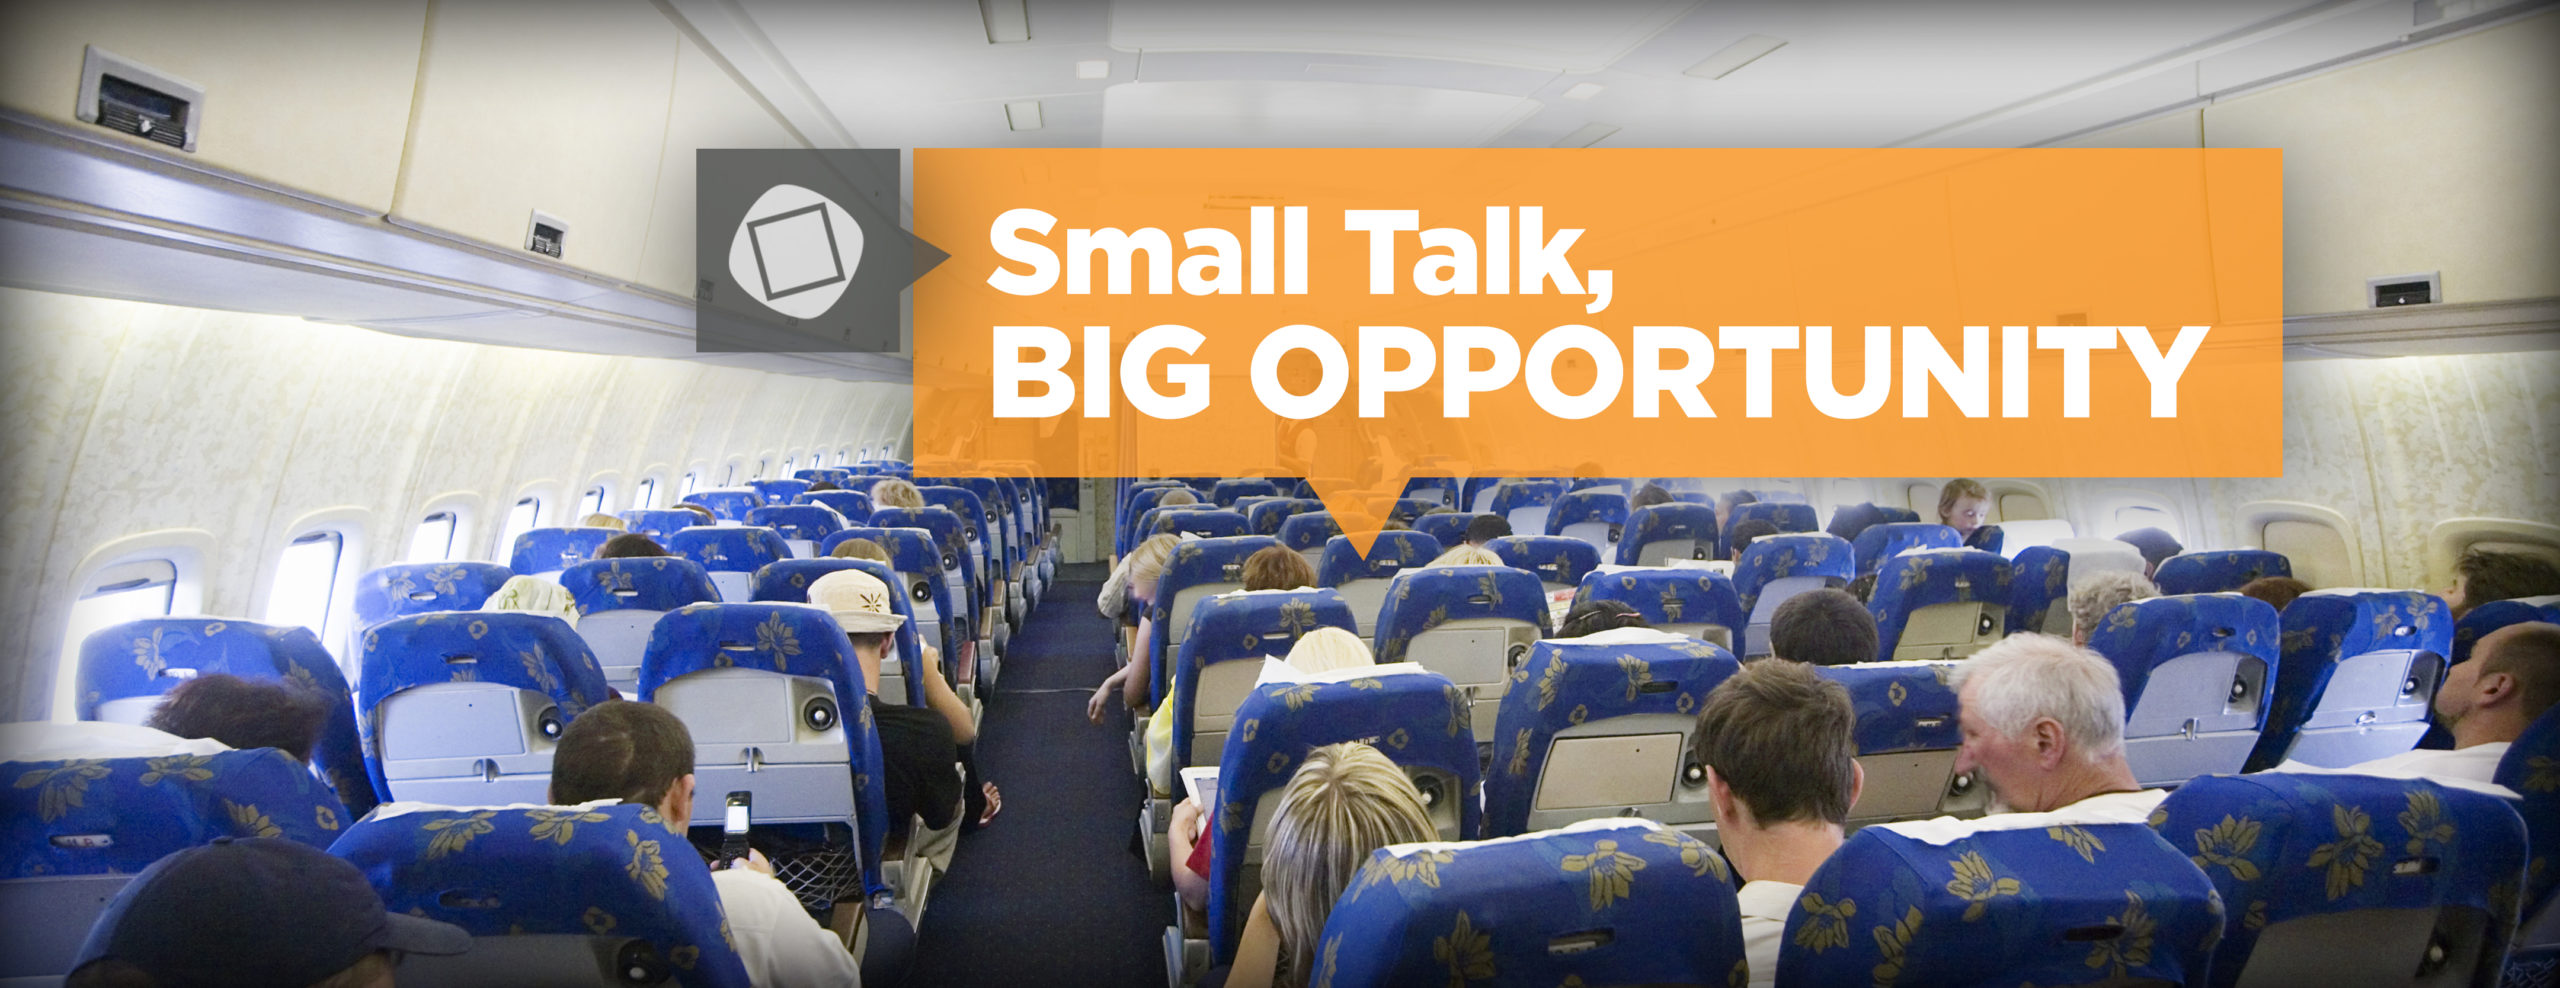 Small Talk, Big Opportunity